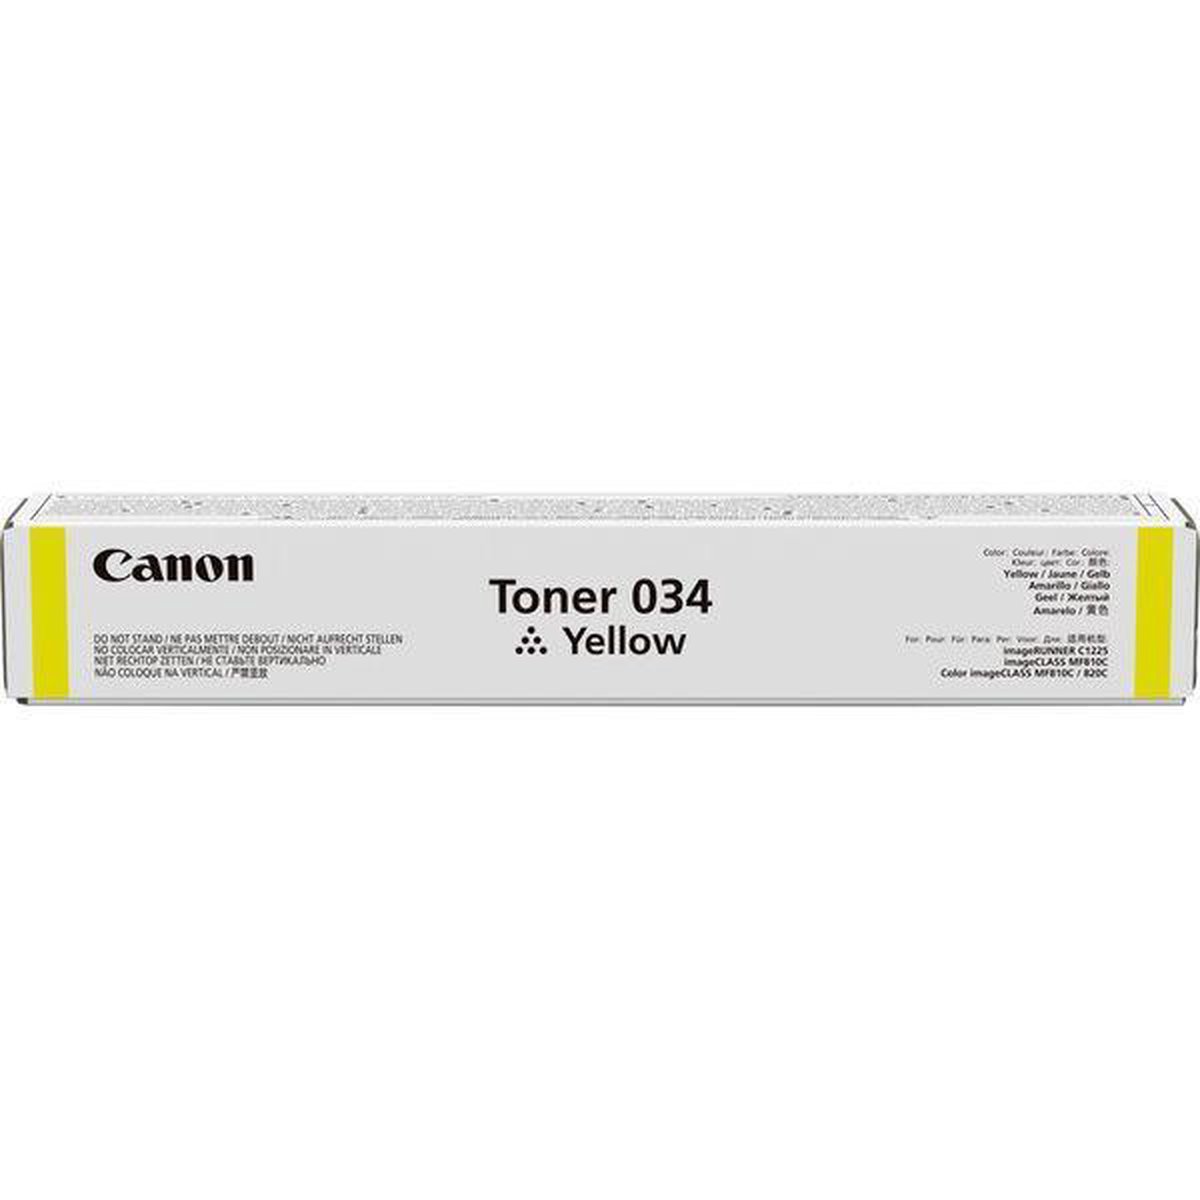 CANON Toner 034 Yellow